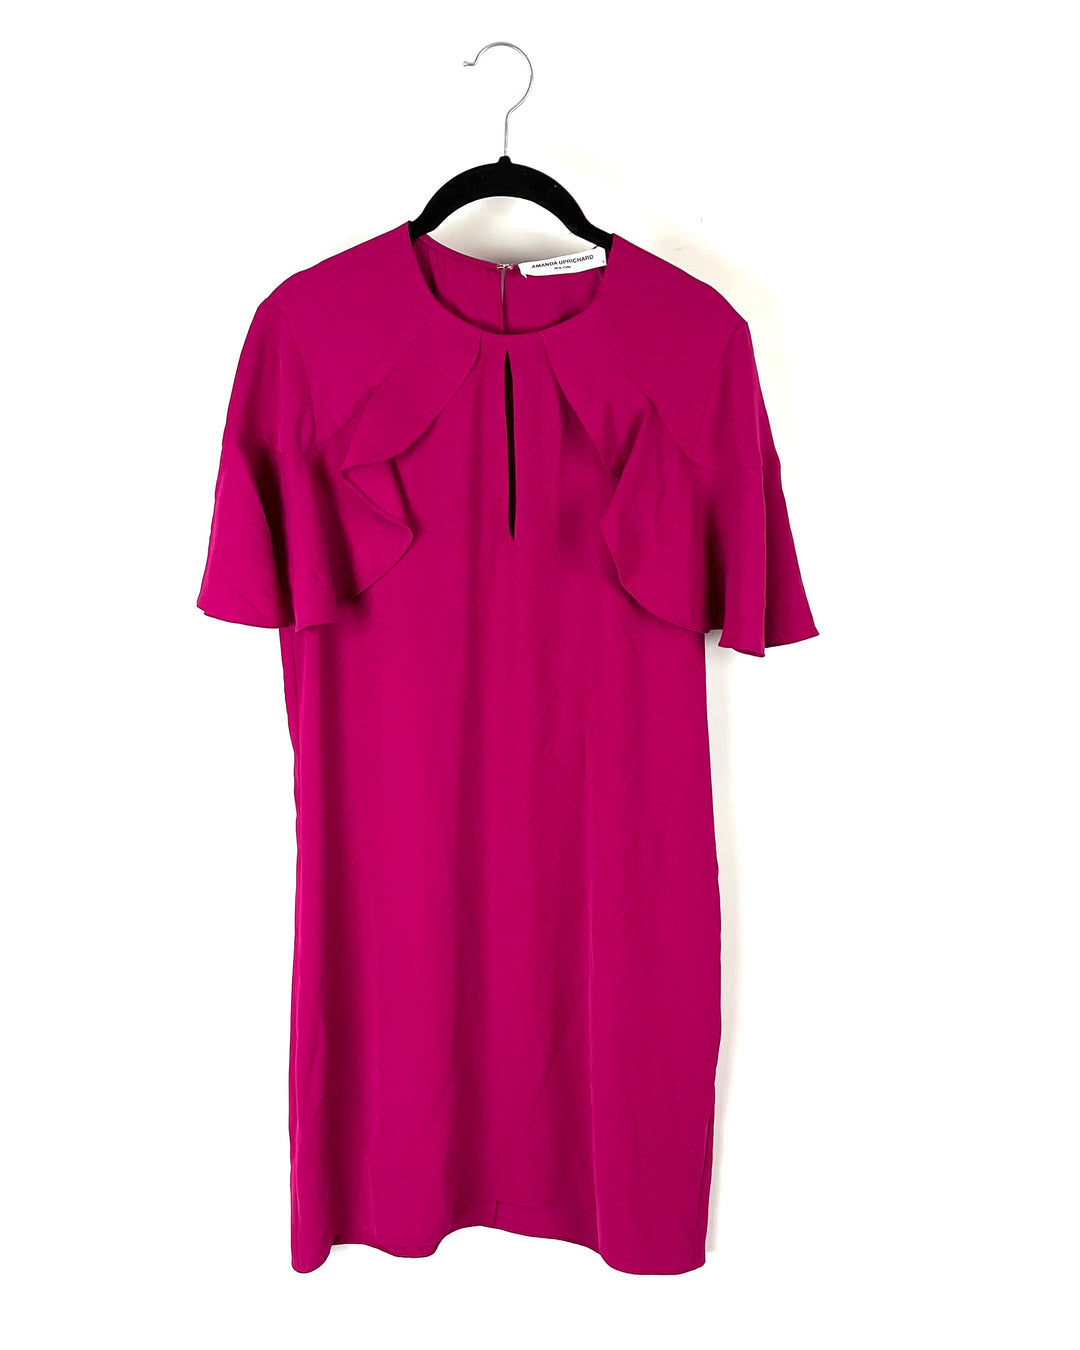 Magenta Ruffle Sleeve Dress - Size 4/6